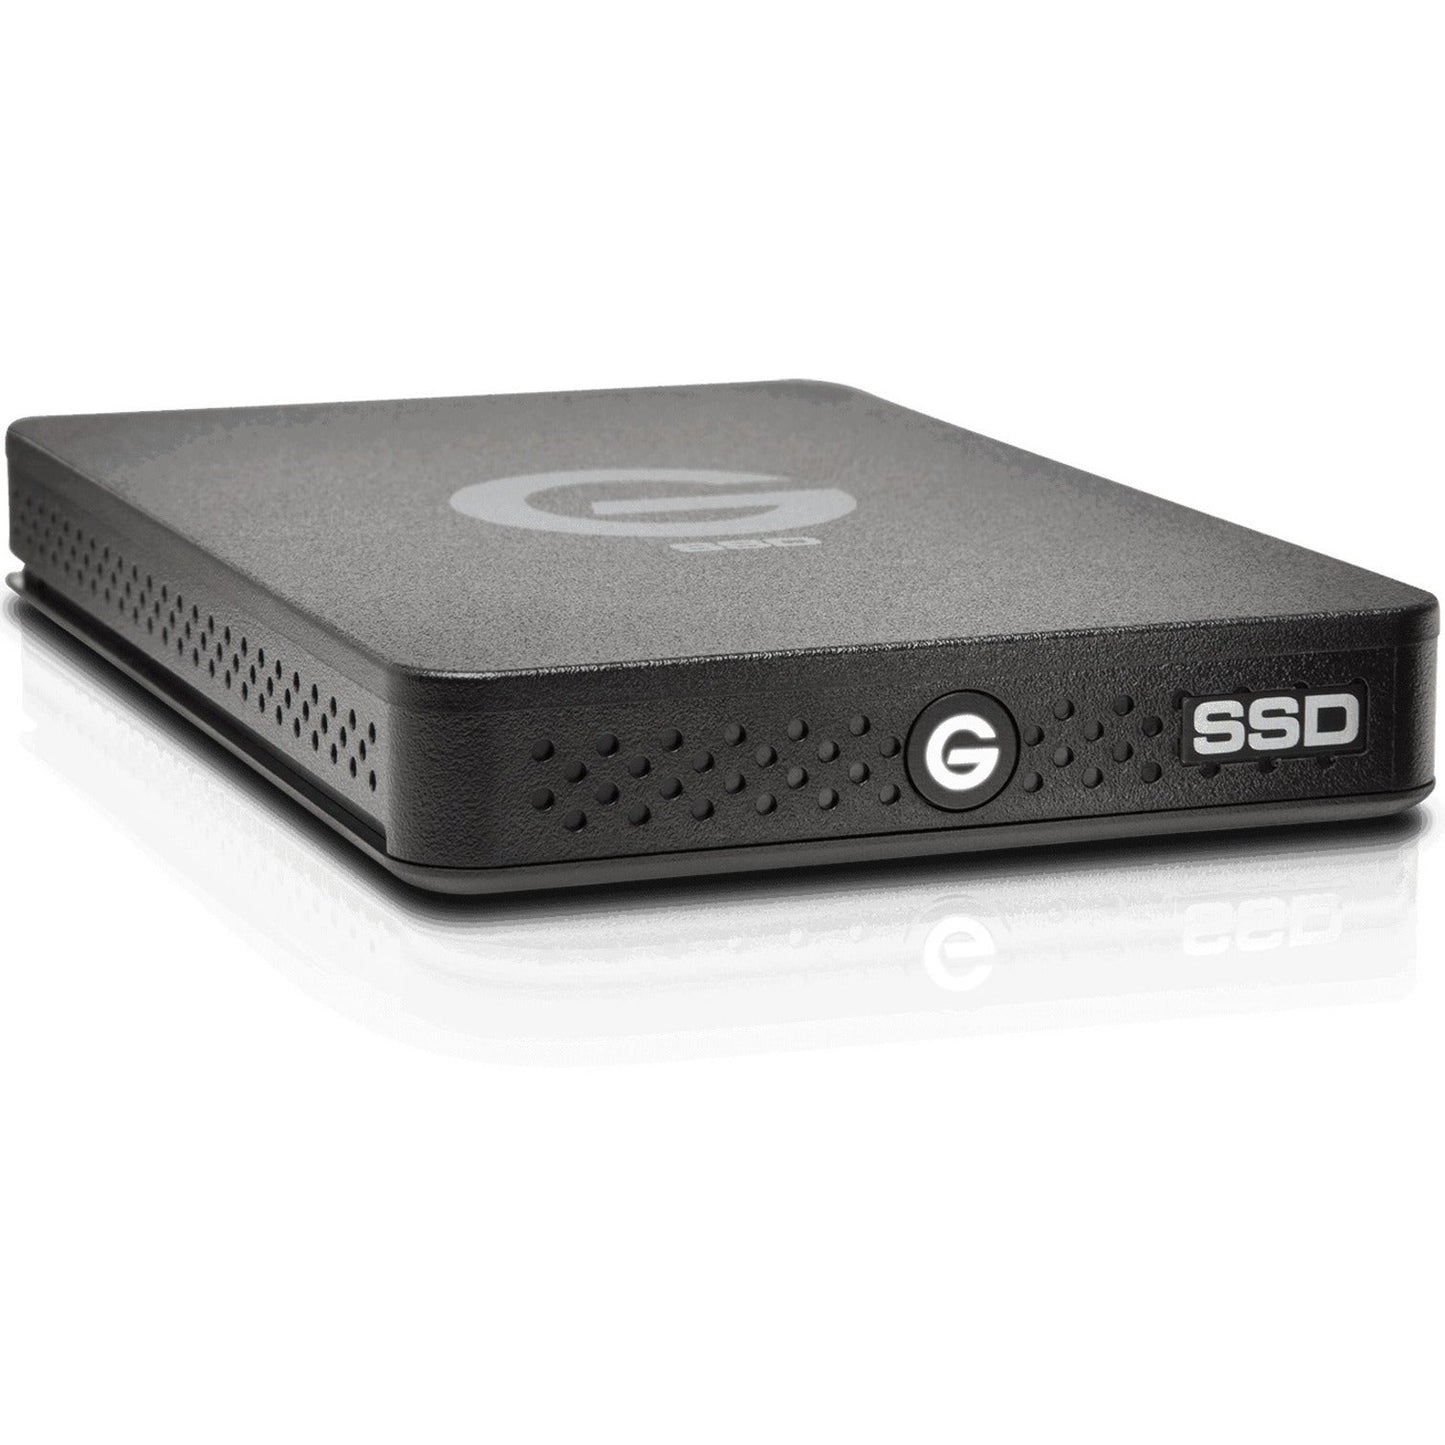 G-Technology G-DRIVE ev RaW 500 GB Portable Rugged Solid State Drive - External - SATA